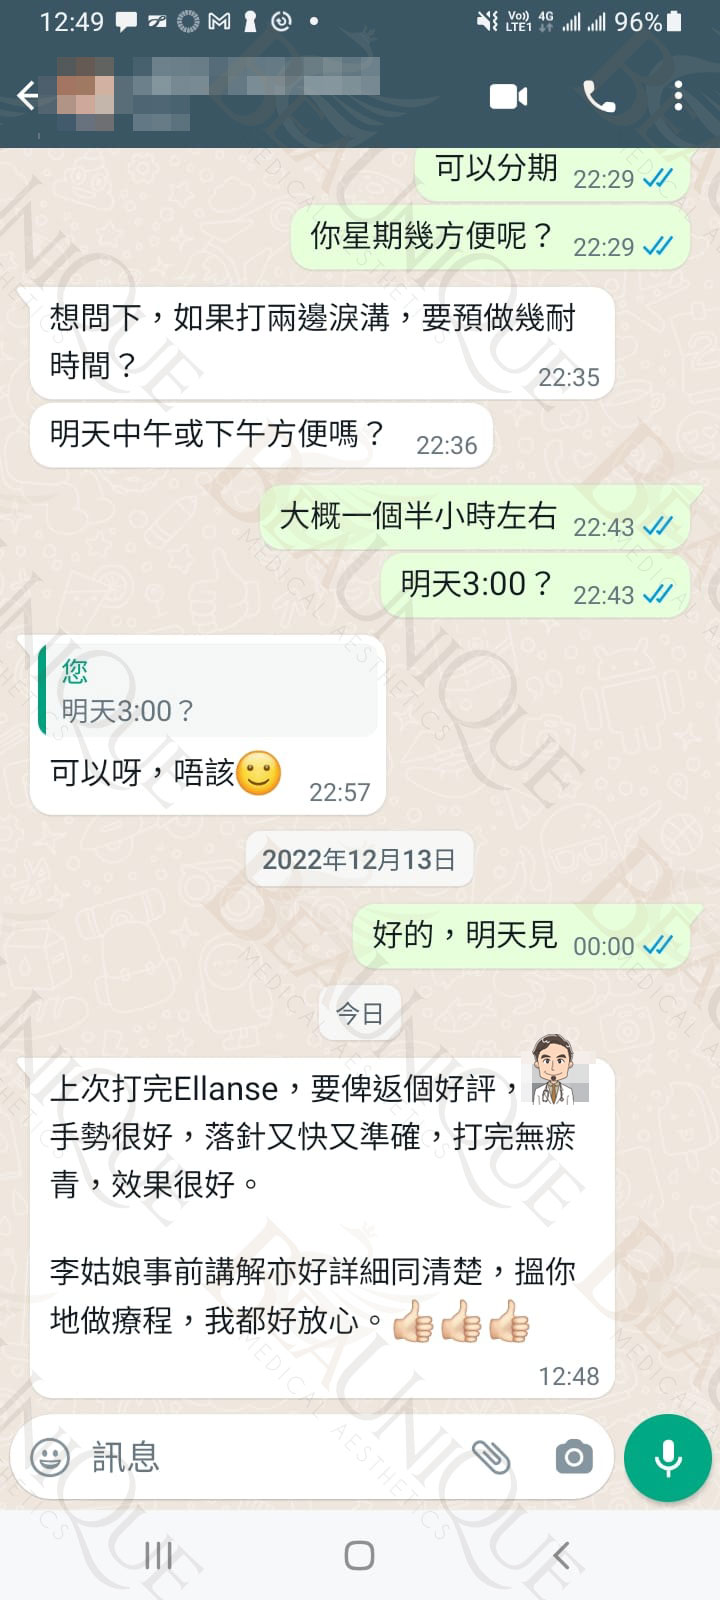 Whatsapp Image 2023 04 18 At 12 51 10a - Ellanse少女針 - ​輪廓療程